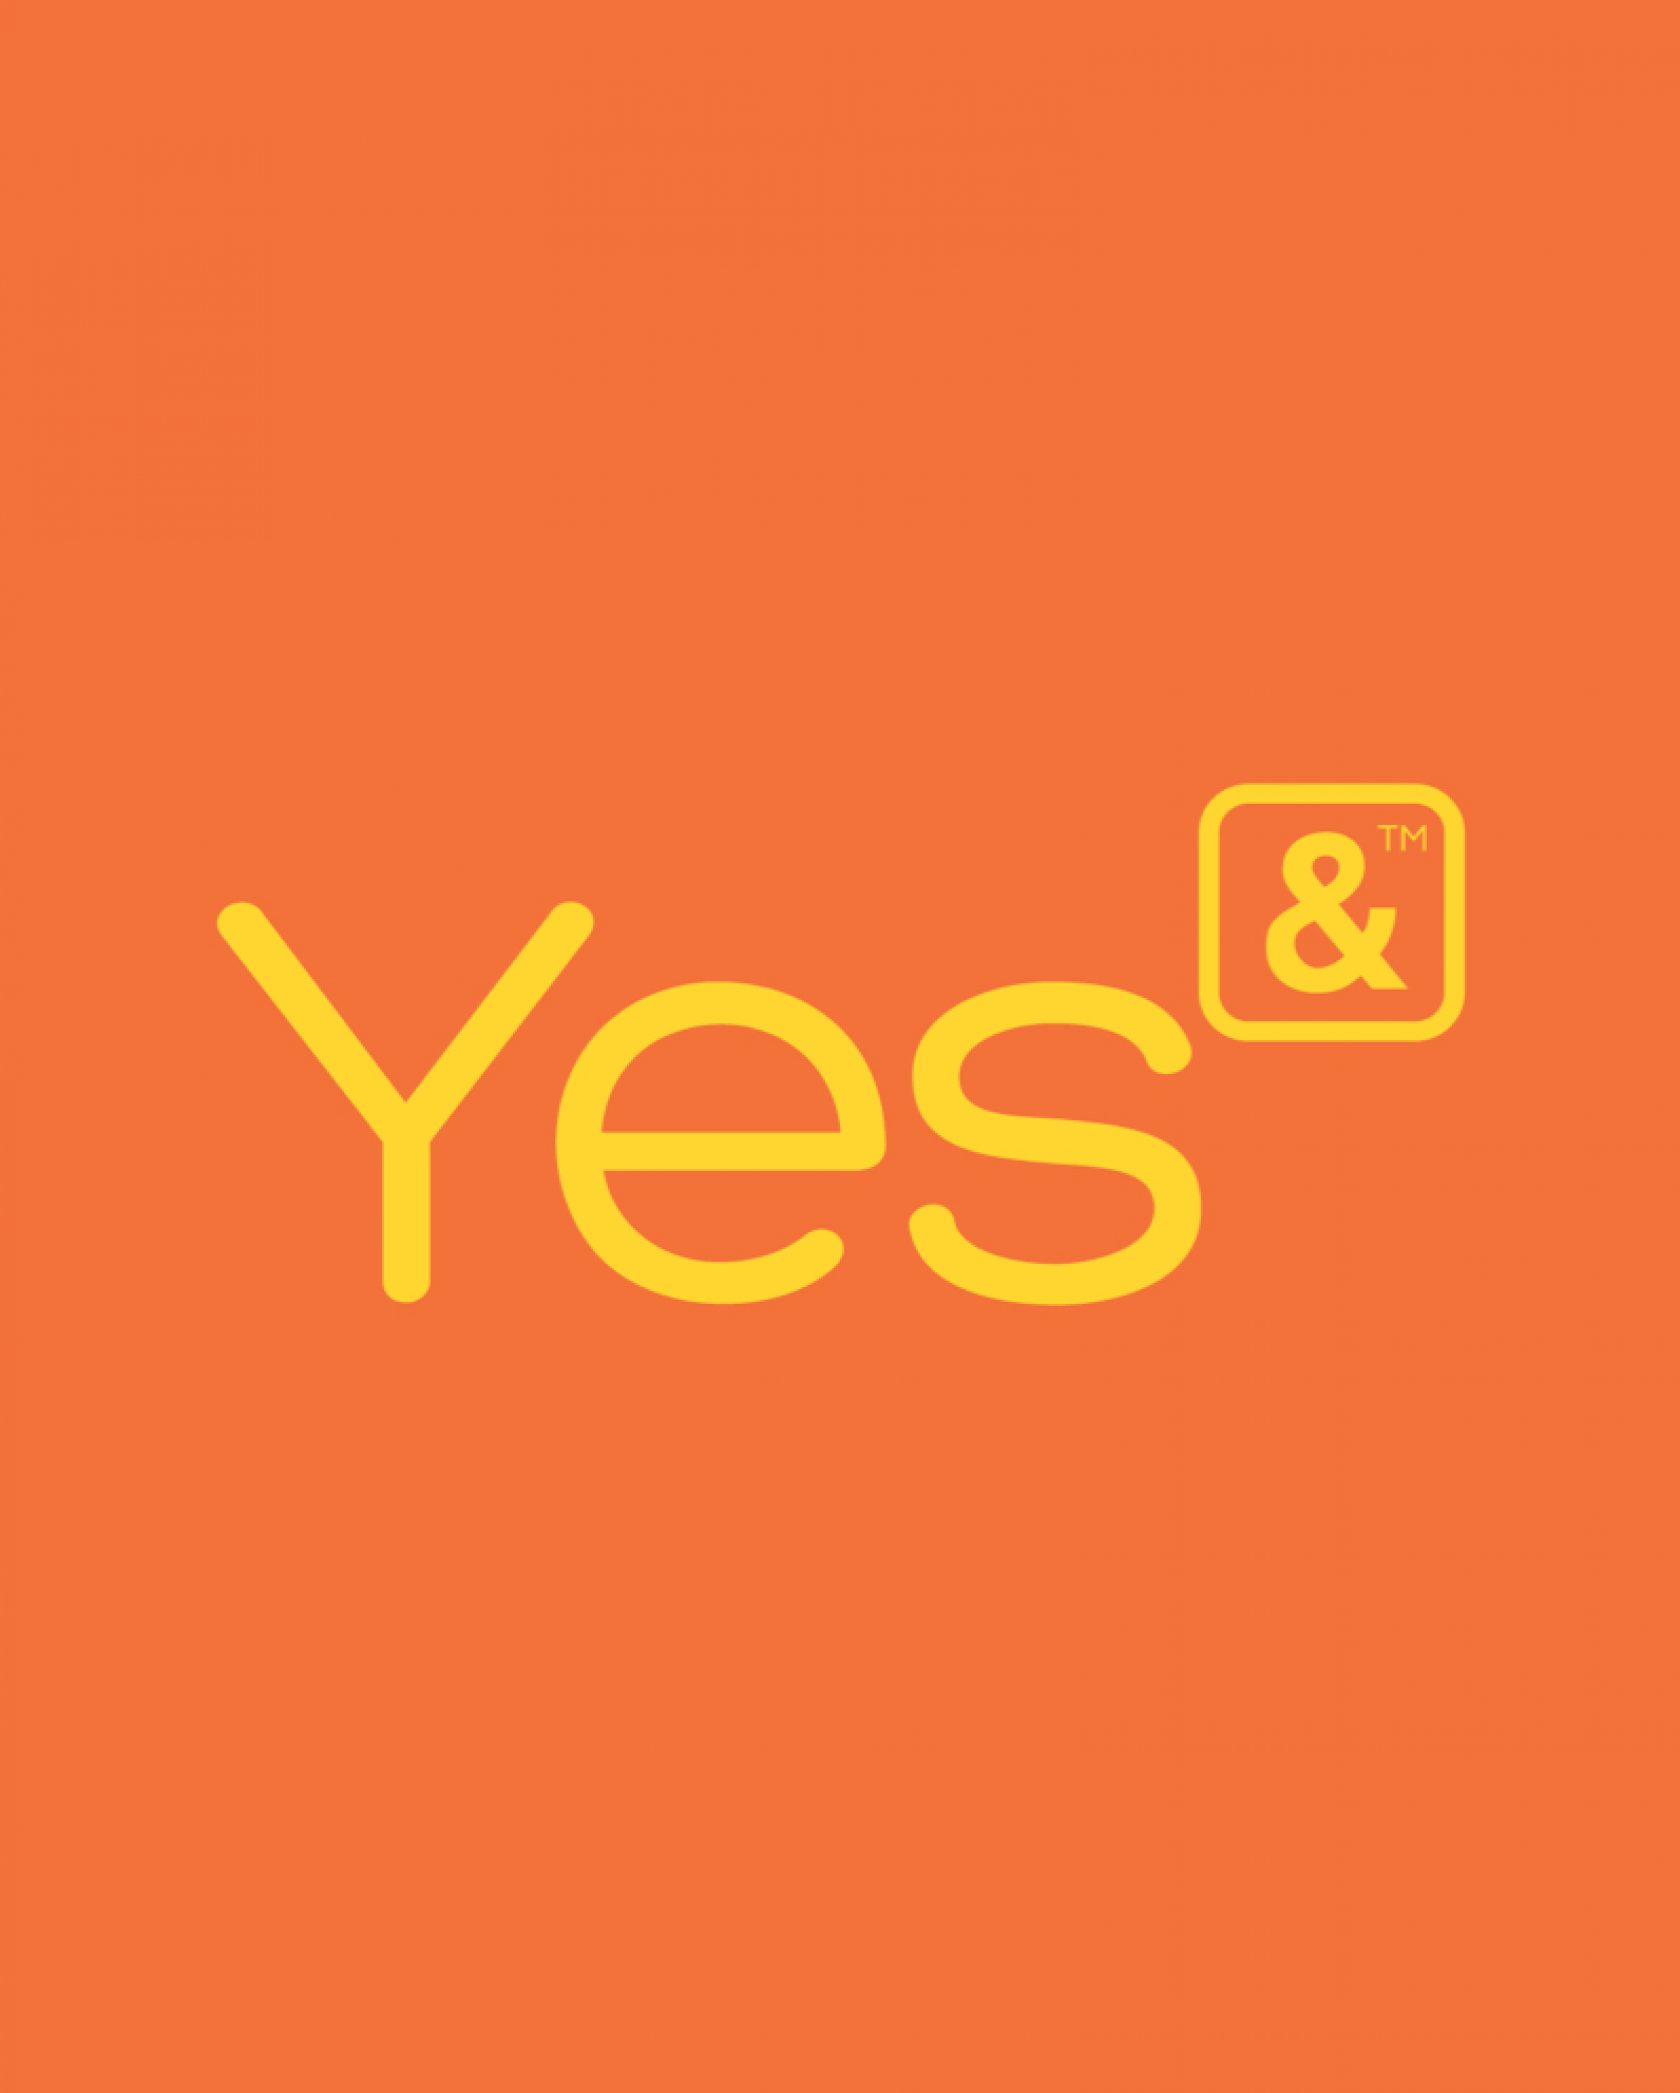 Yes & logo design